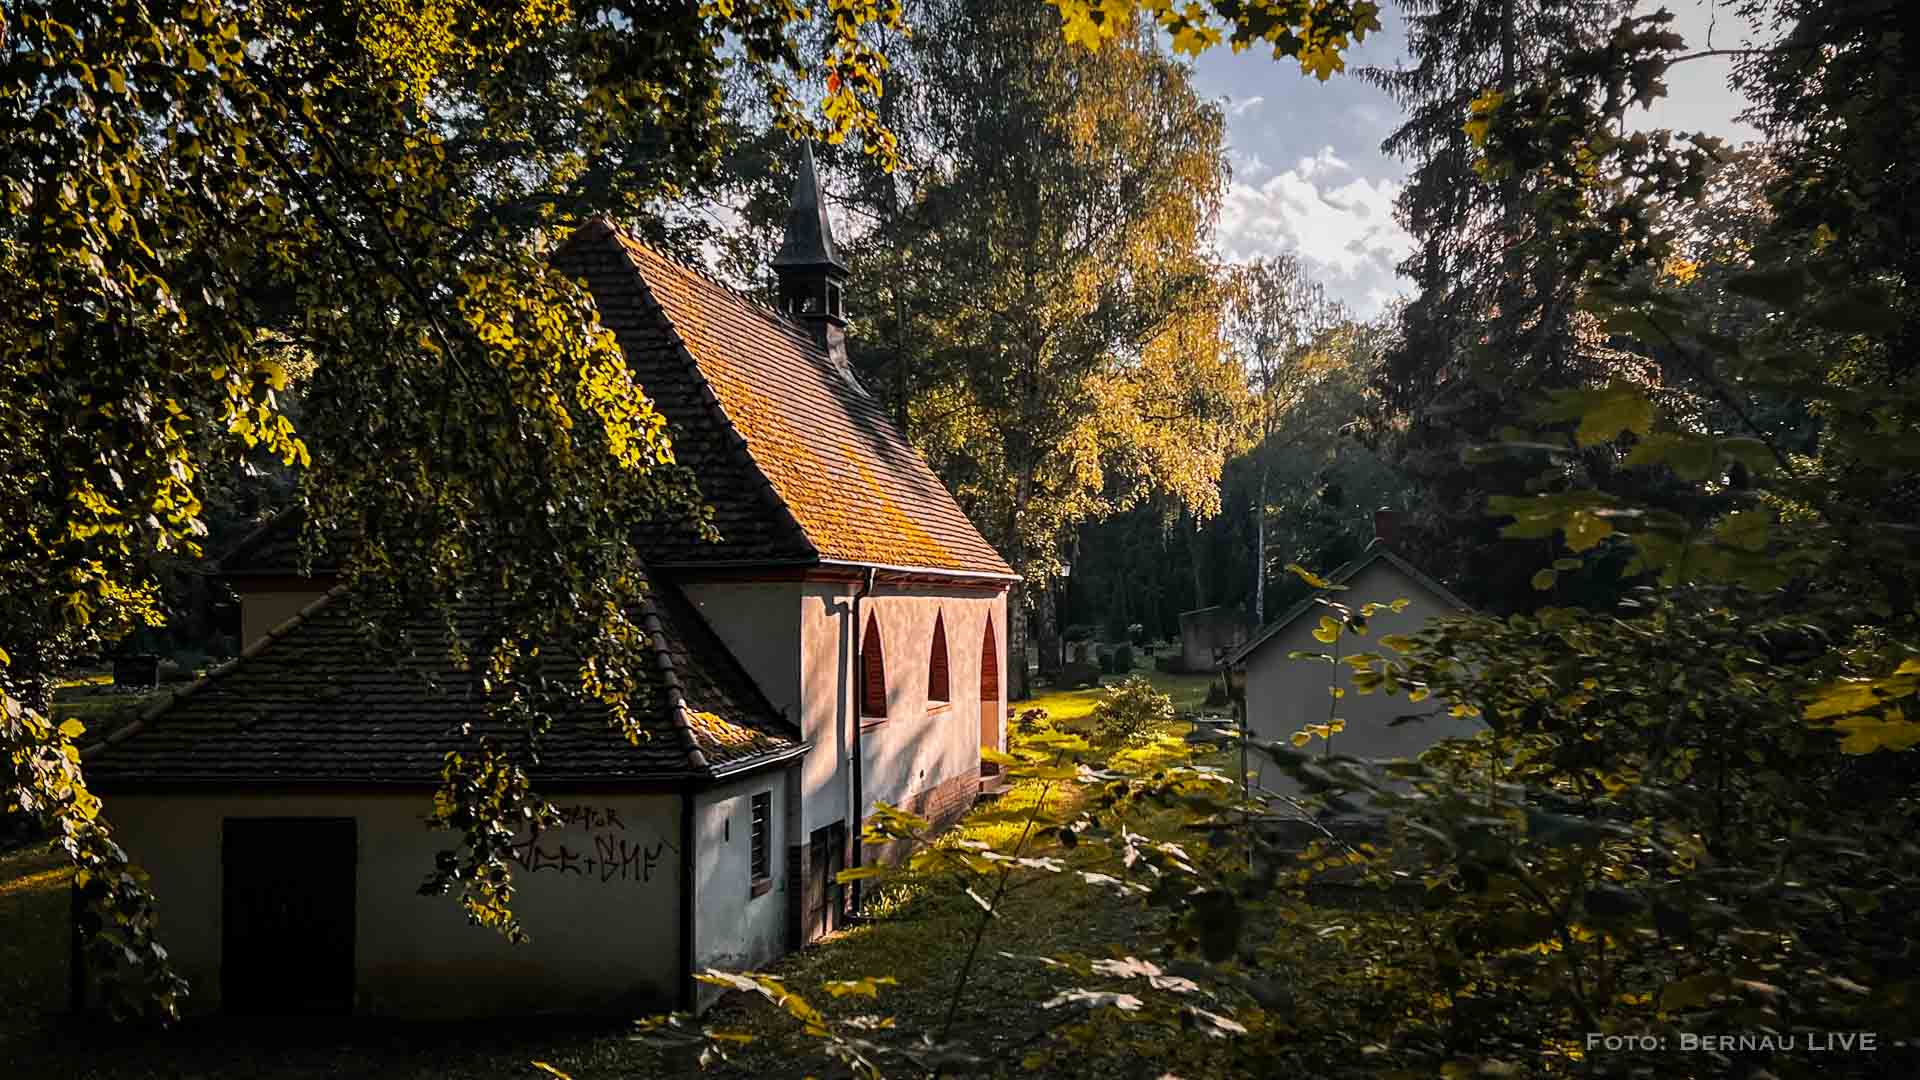 a building with trees around it - Kapelle Friedhof Bernau,